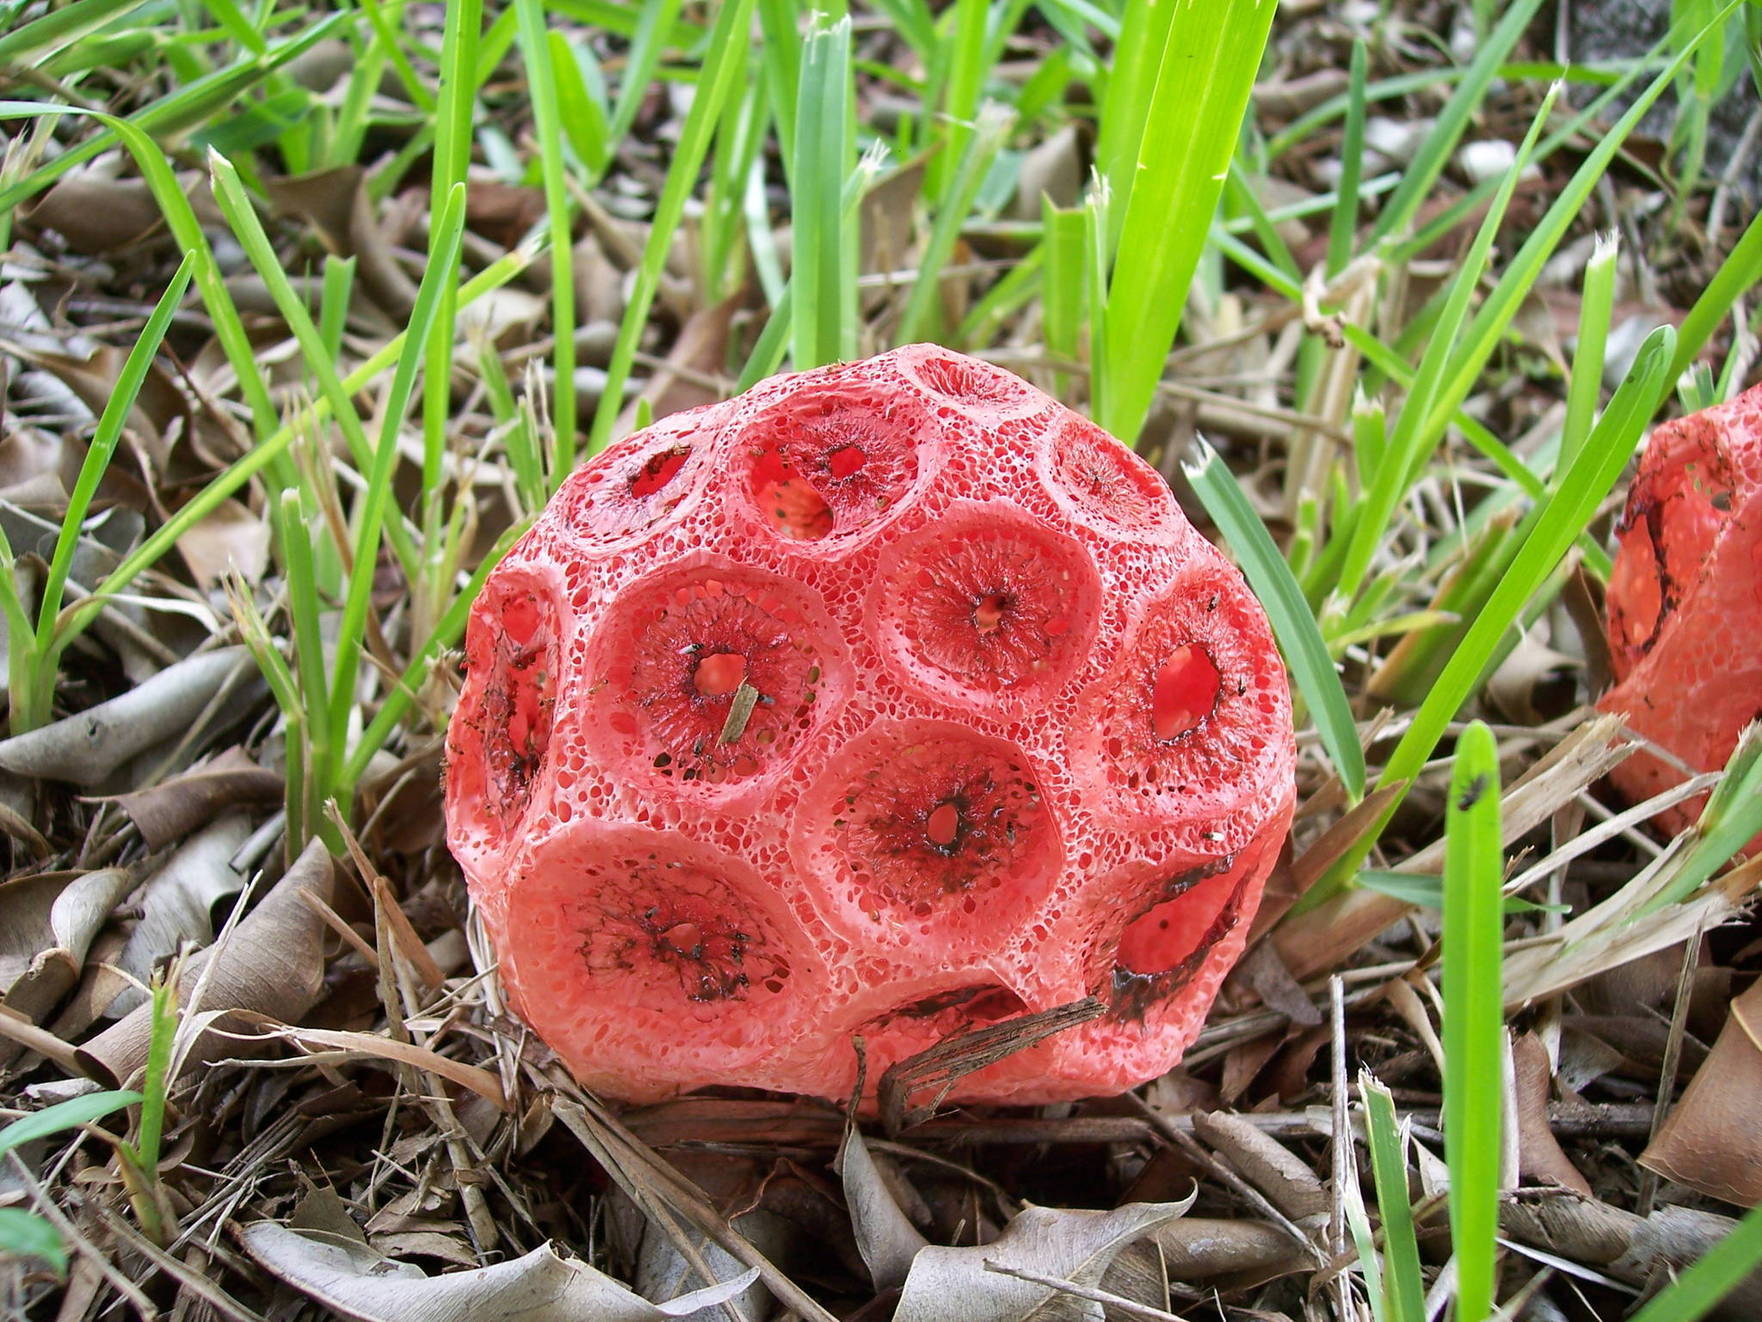 Strange Red Mushrooms / Pods found in Florida - Mushroom Hunting and ...